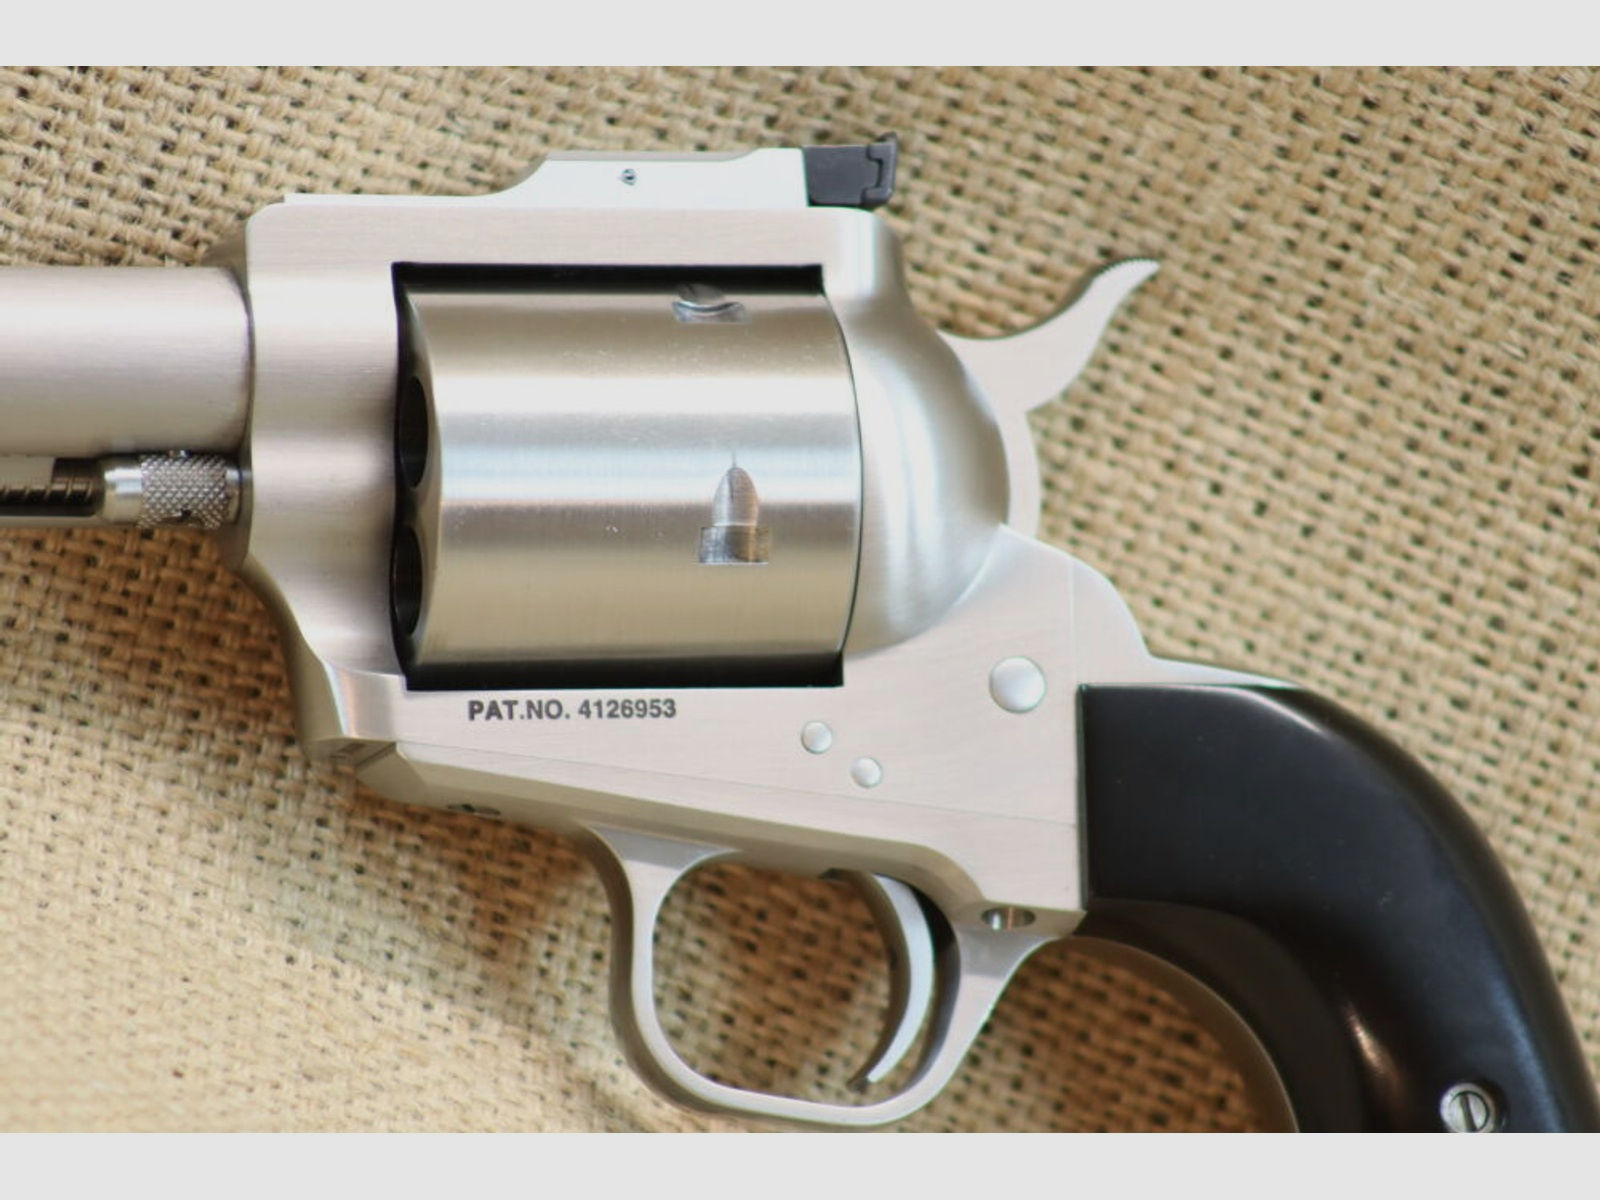 Revolver, Freedom Arms, Mod. Casull Premier Grade